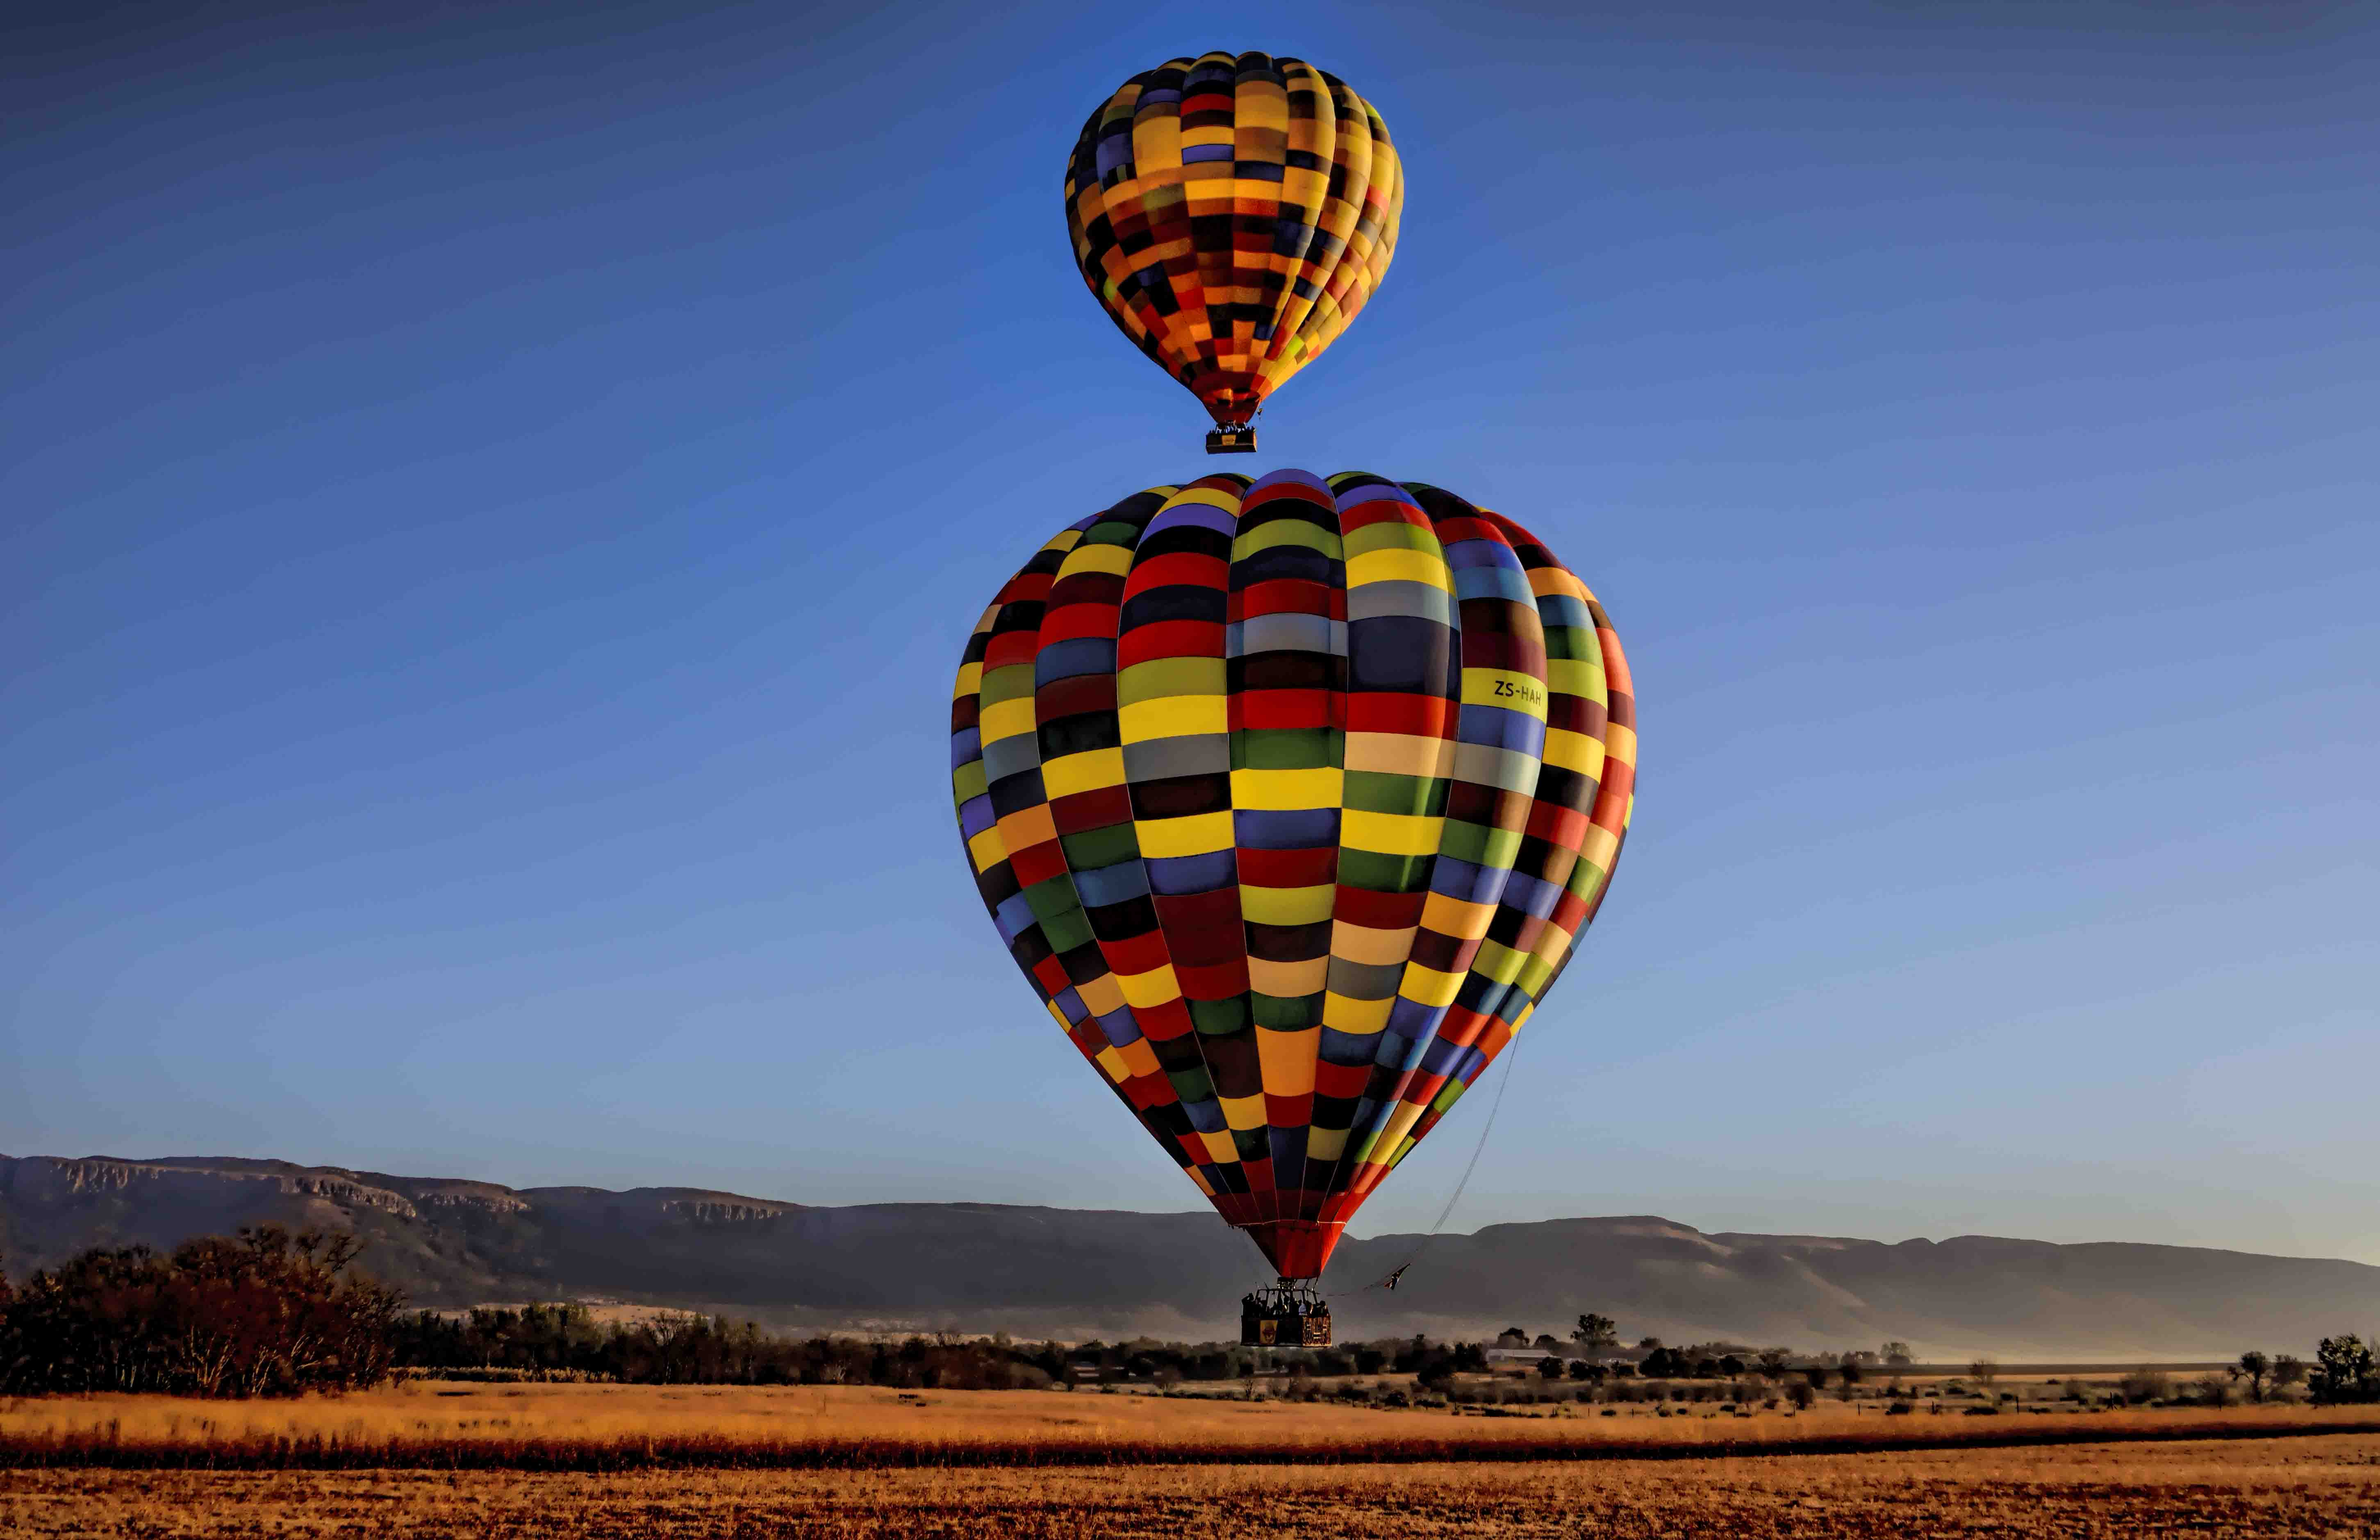 Experience a hot air balloon safari over the Magalies River Valley with Bill Harrop's 